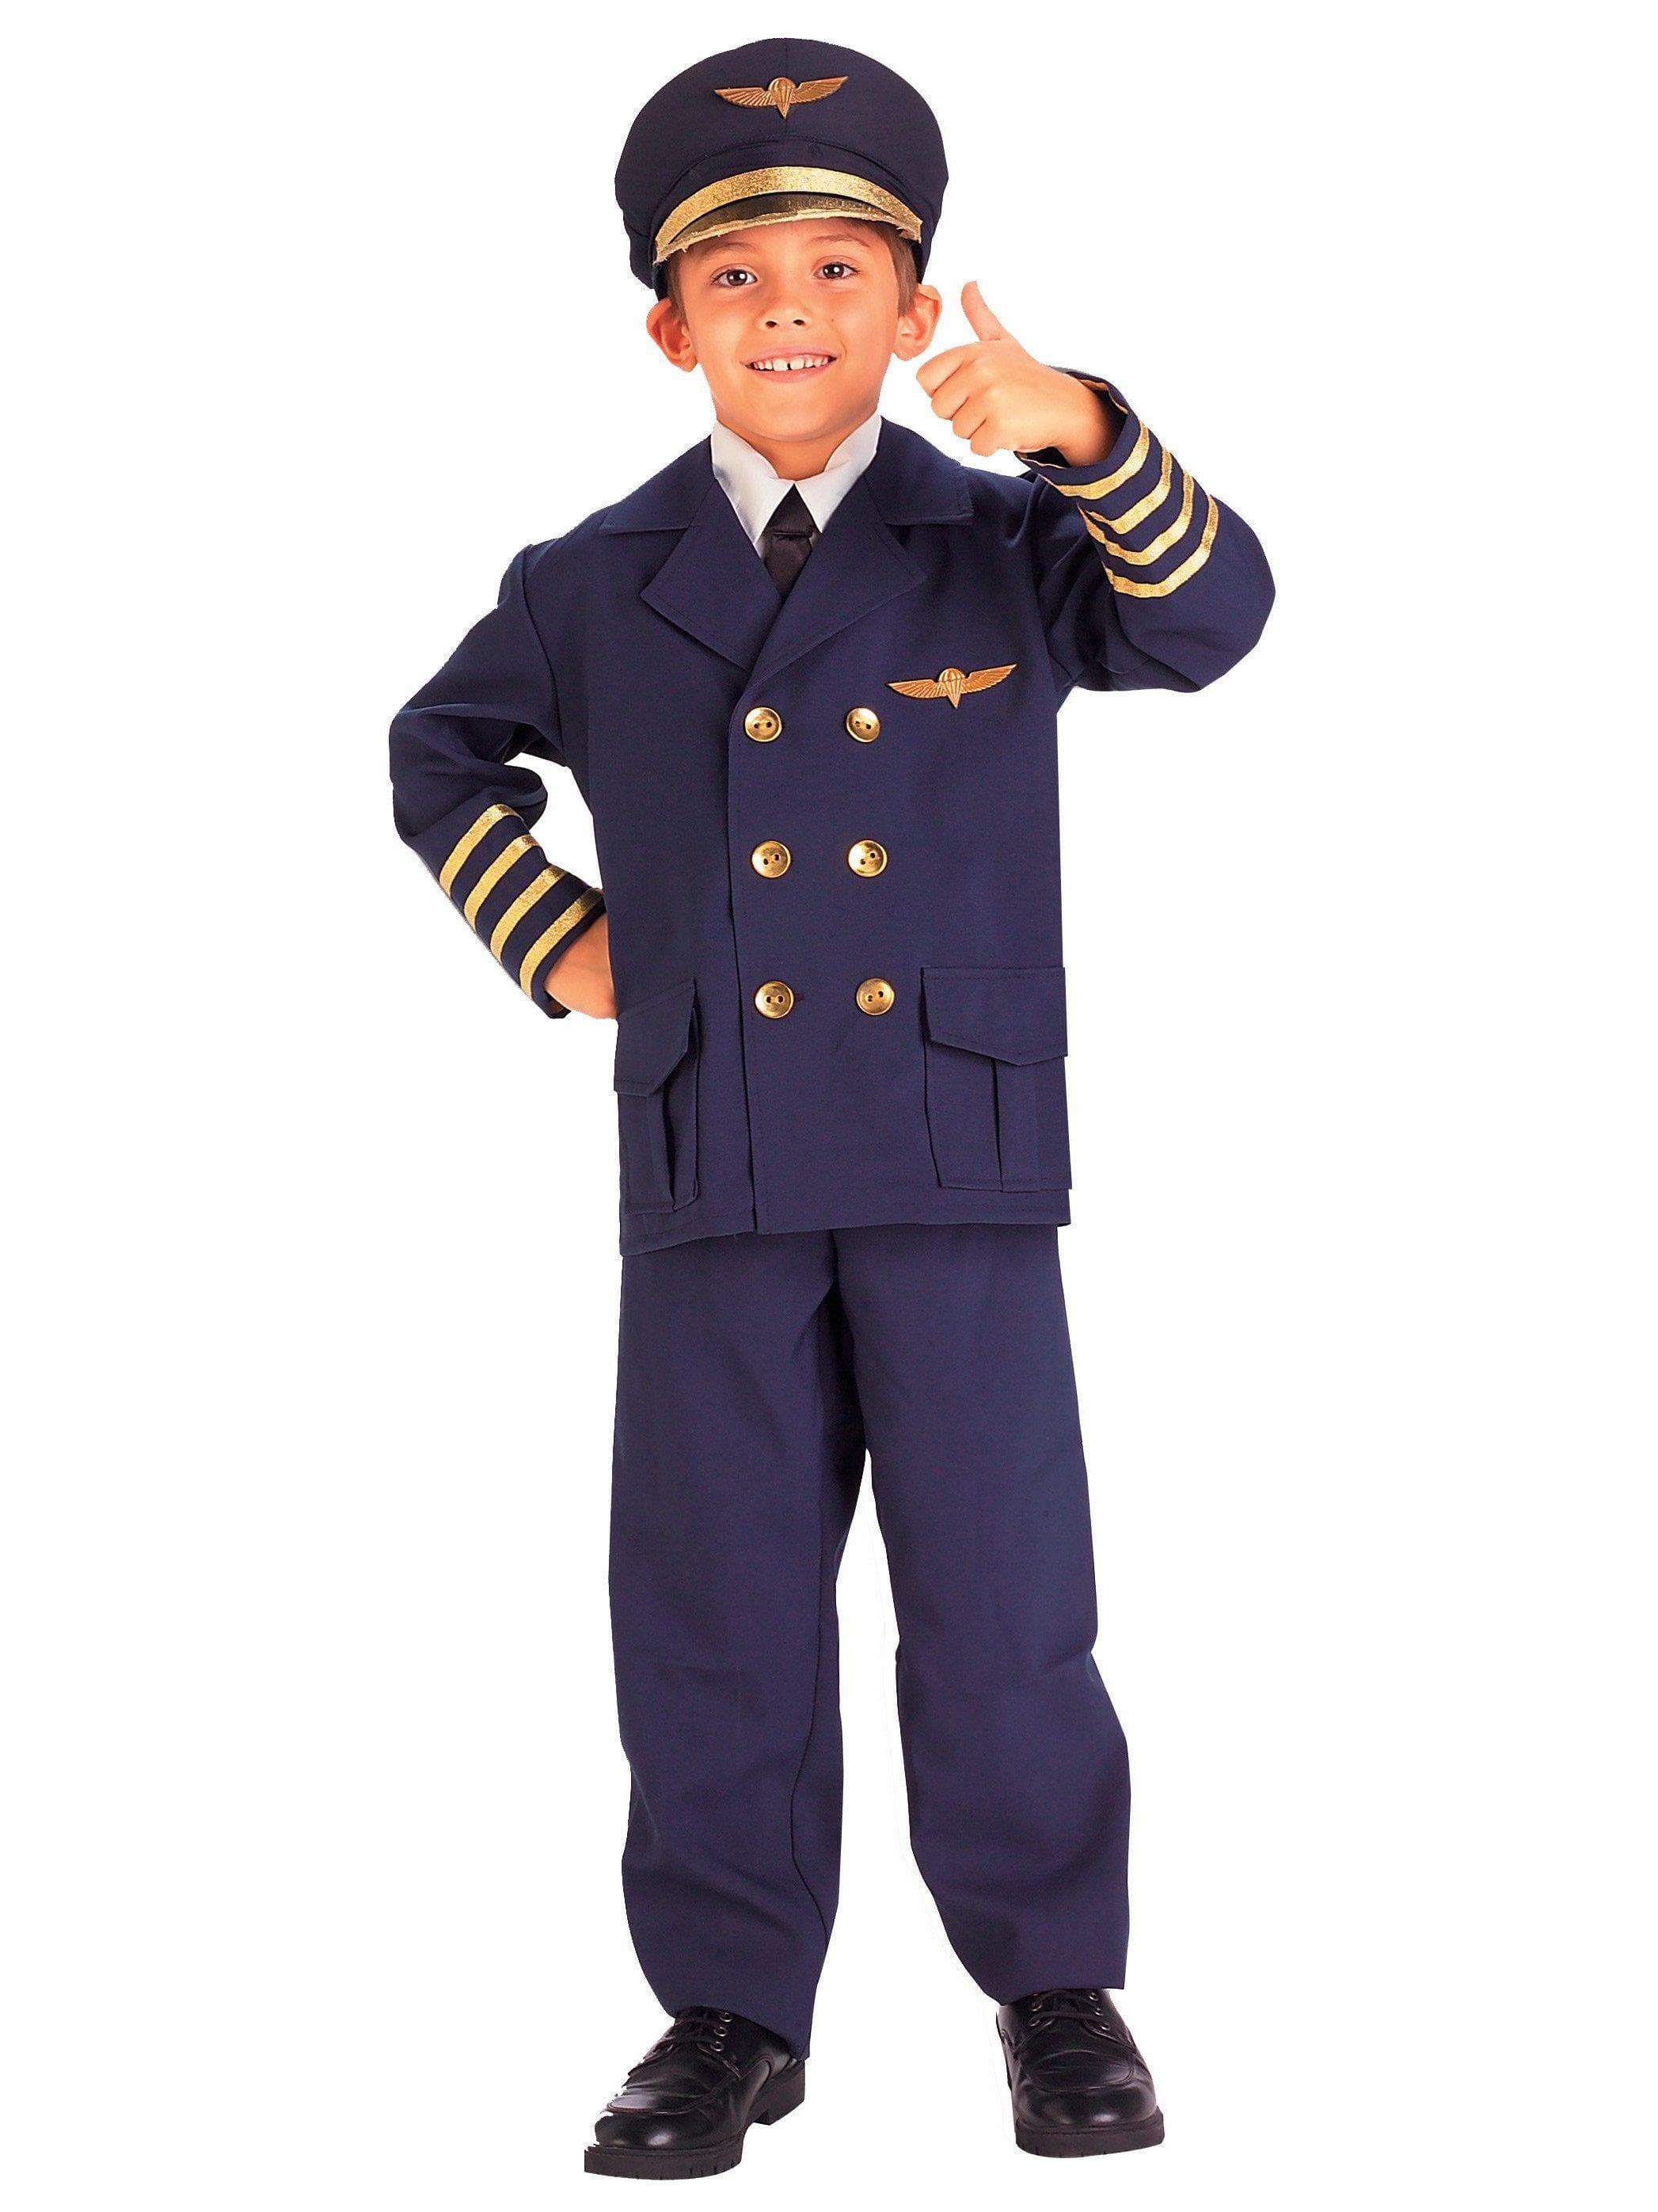 Kids' Blue and Gold Junior Airline Pilot Costume - costumes.com